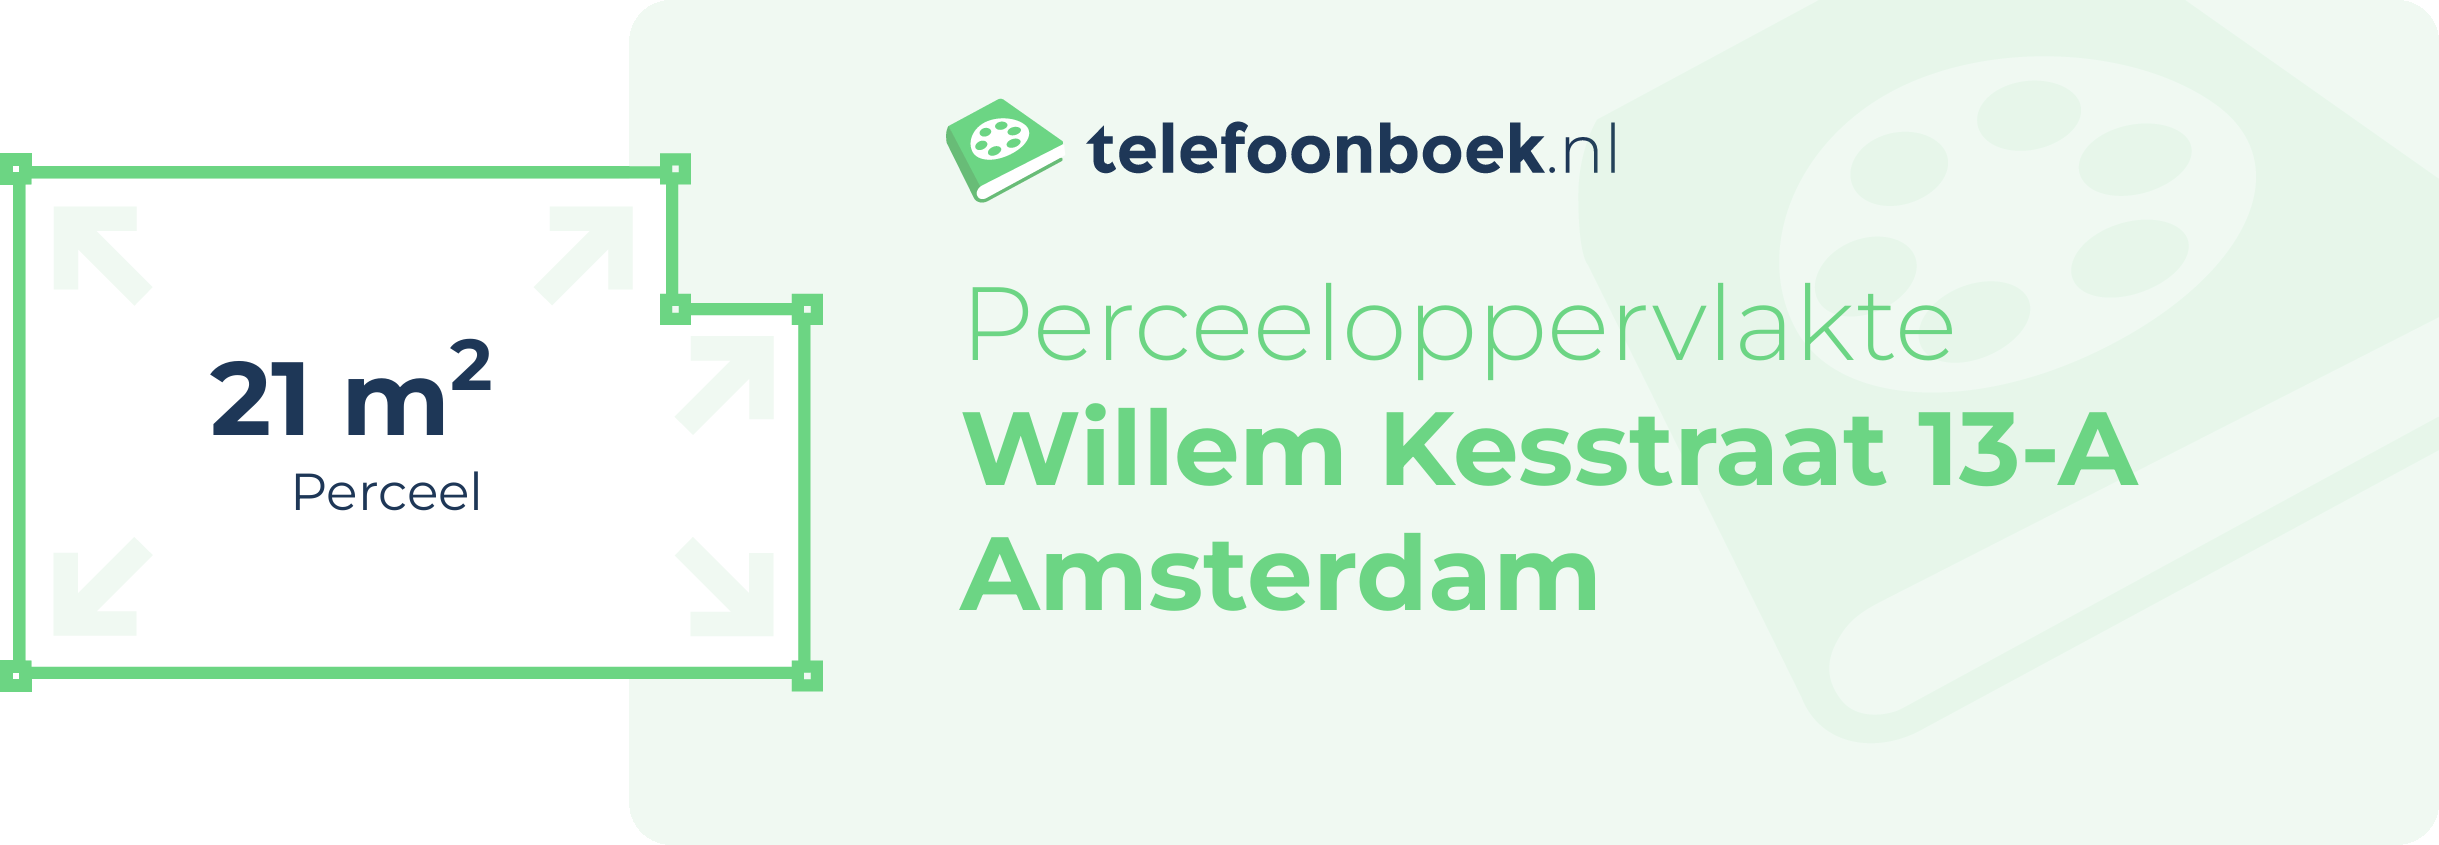 Perceeloppervlakte Willem Kesstraat 13-A Amsterdam